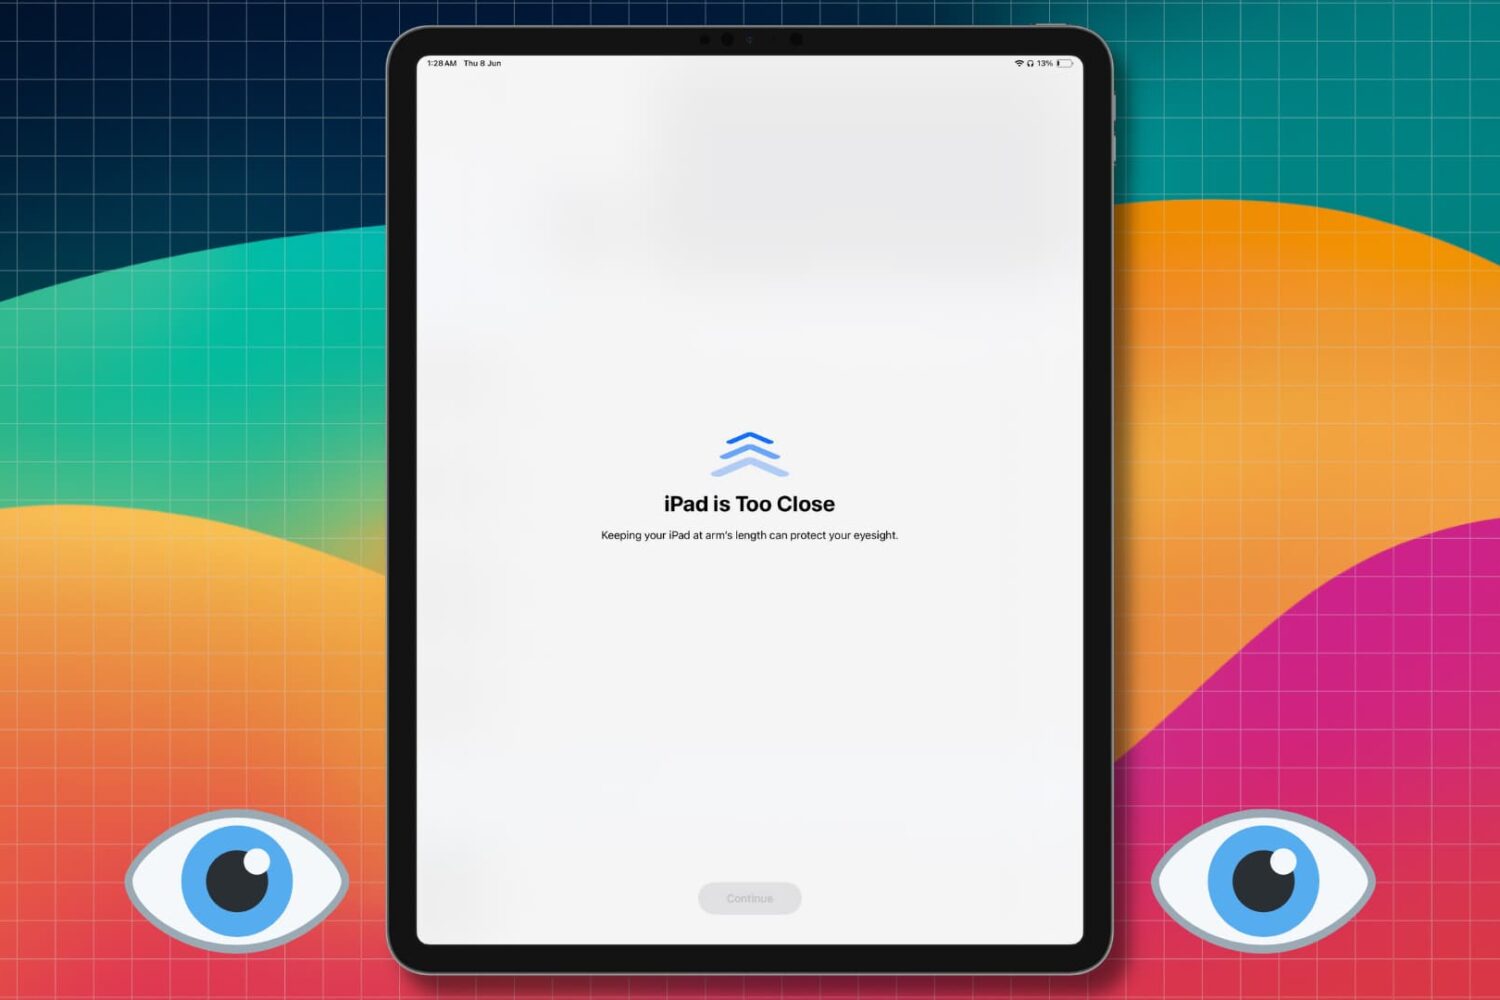 iPad is Too Close message in iPadOS 17